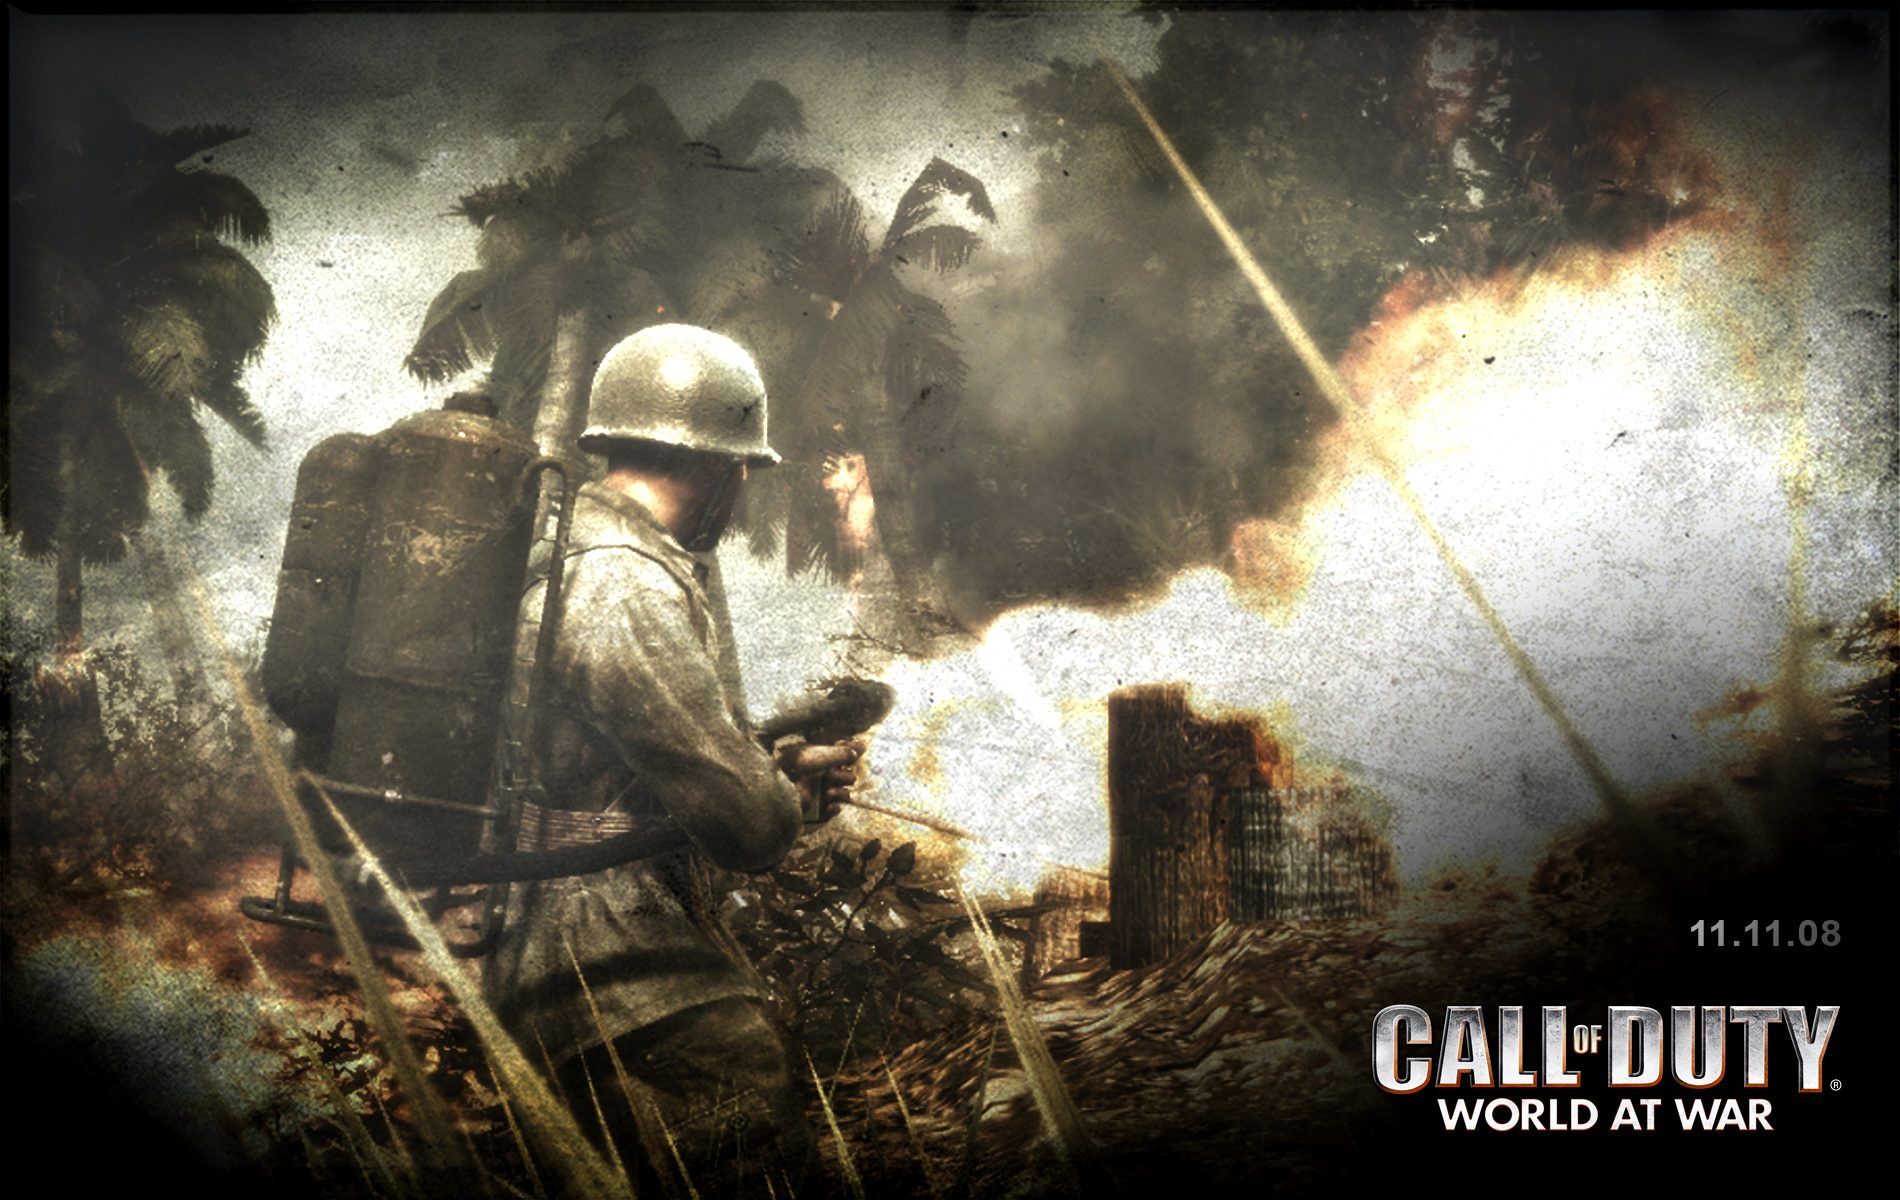 Call of Duty - World At War Wallpaper 1900x1200 ID3385